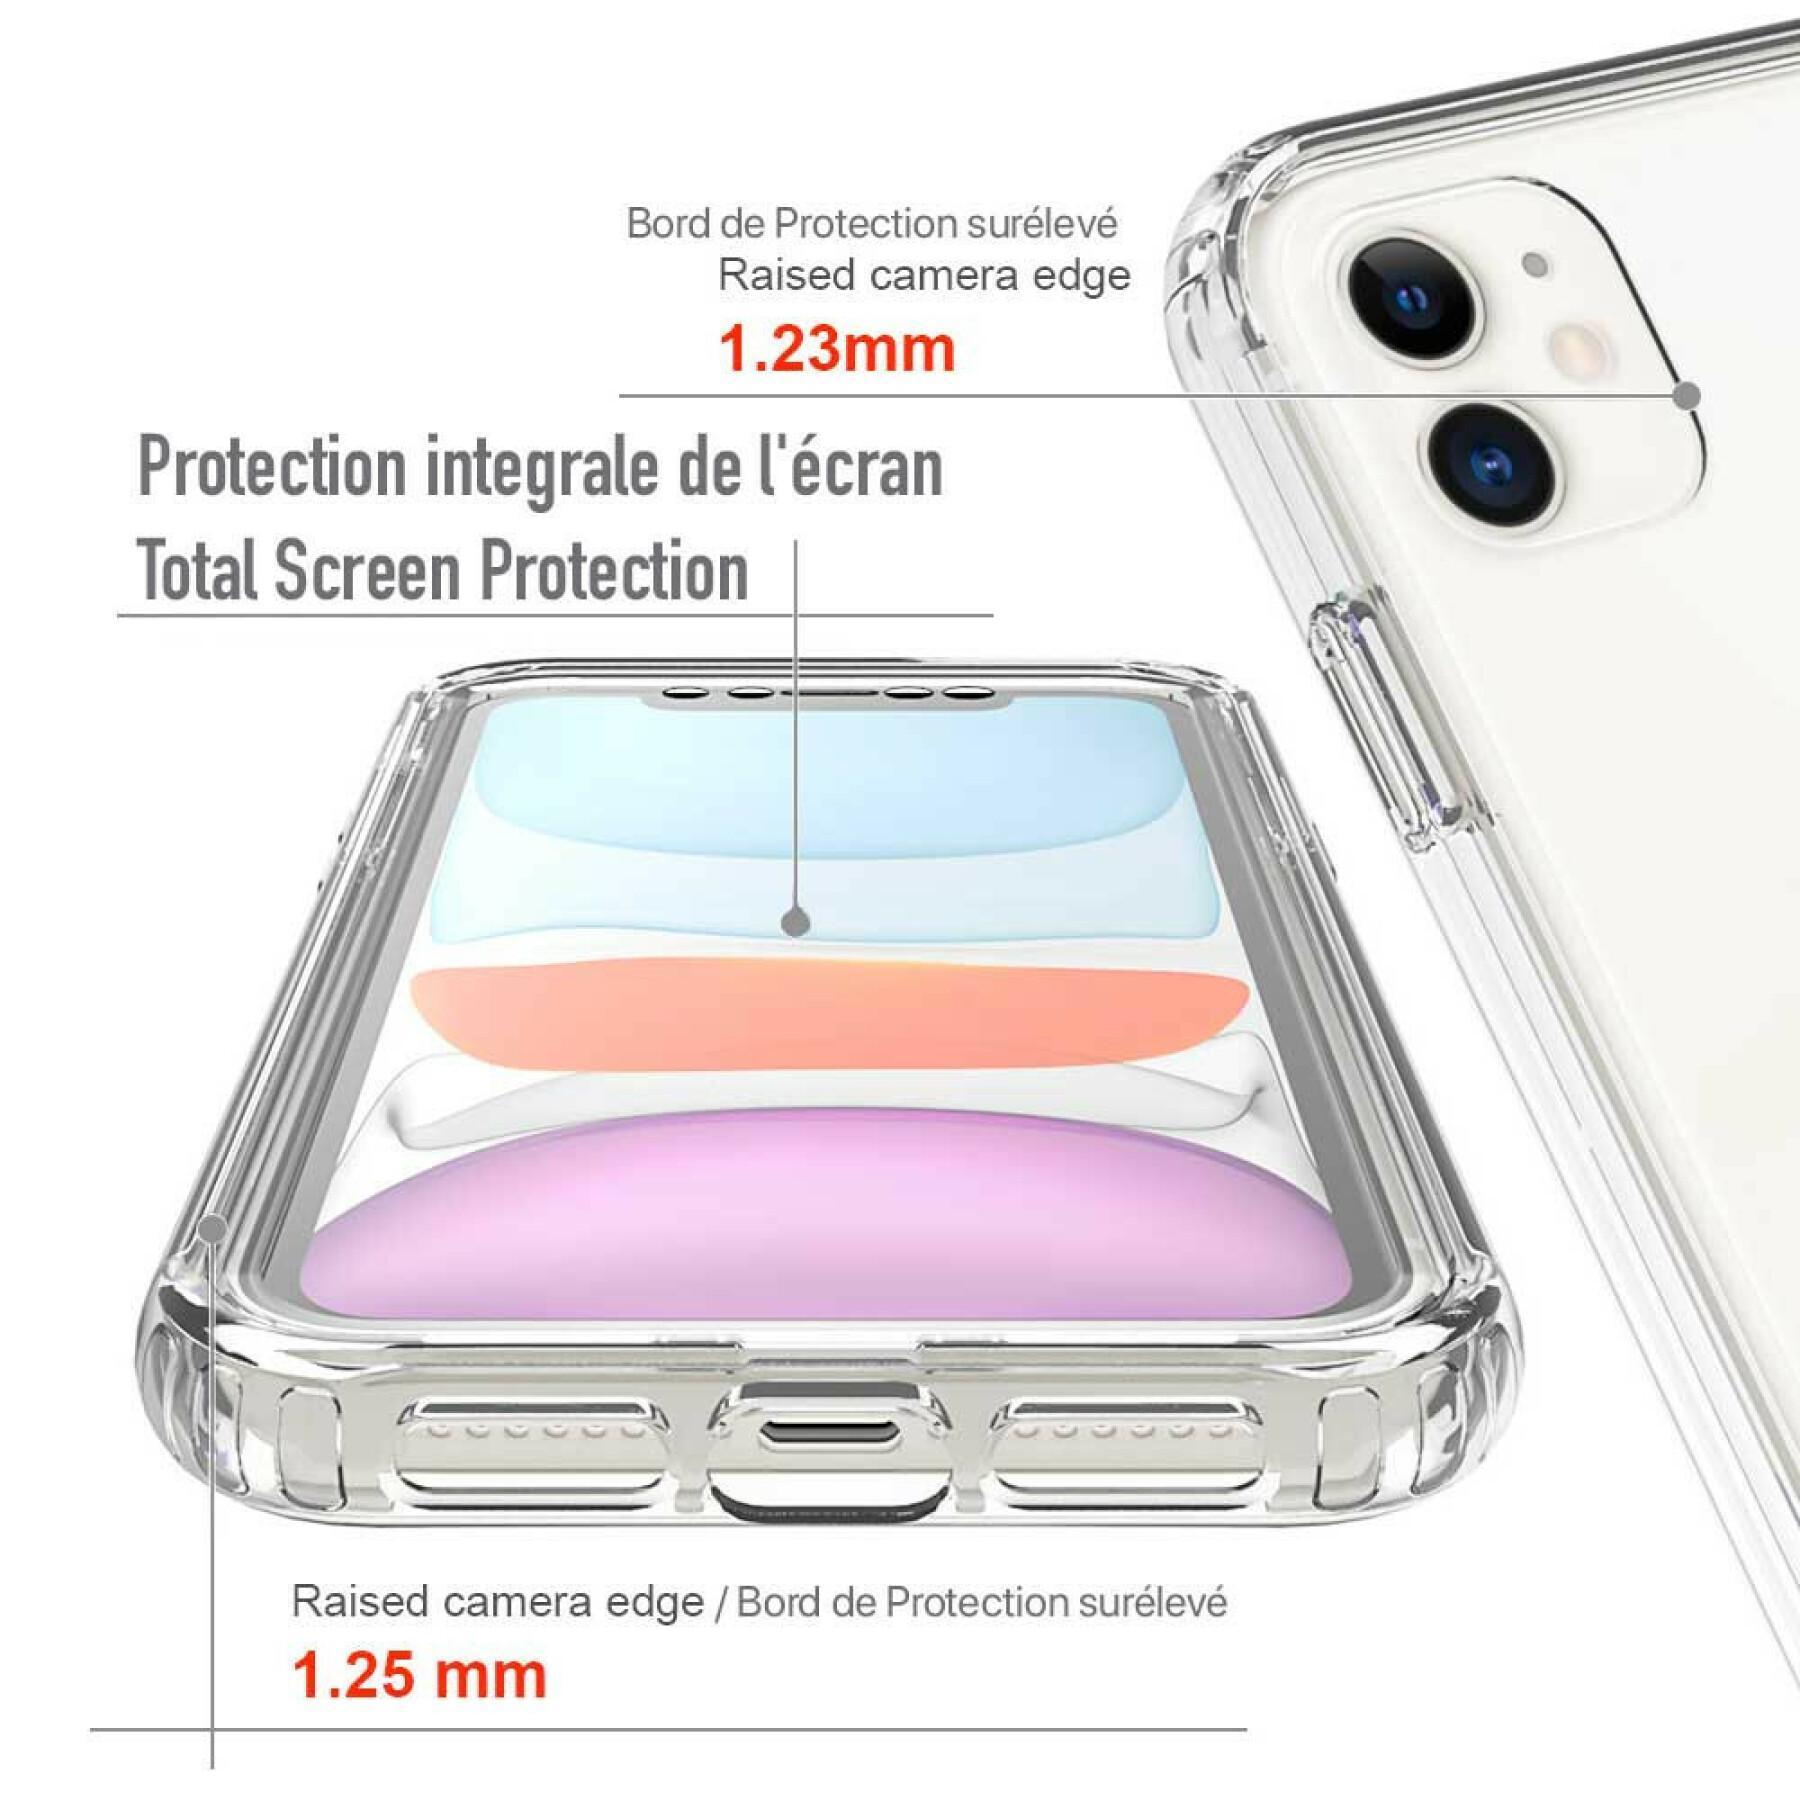 Smartphone-Hülle iphone 12 mini - 360° stoßfester Schutz CaseProof Shock